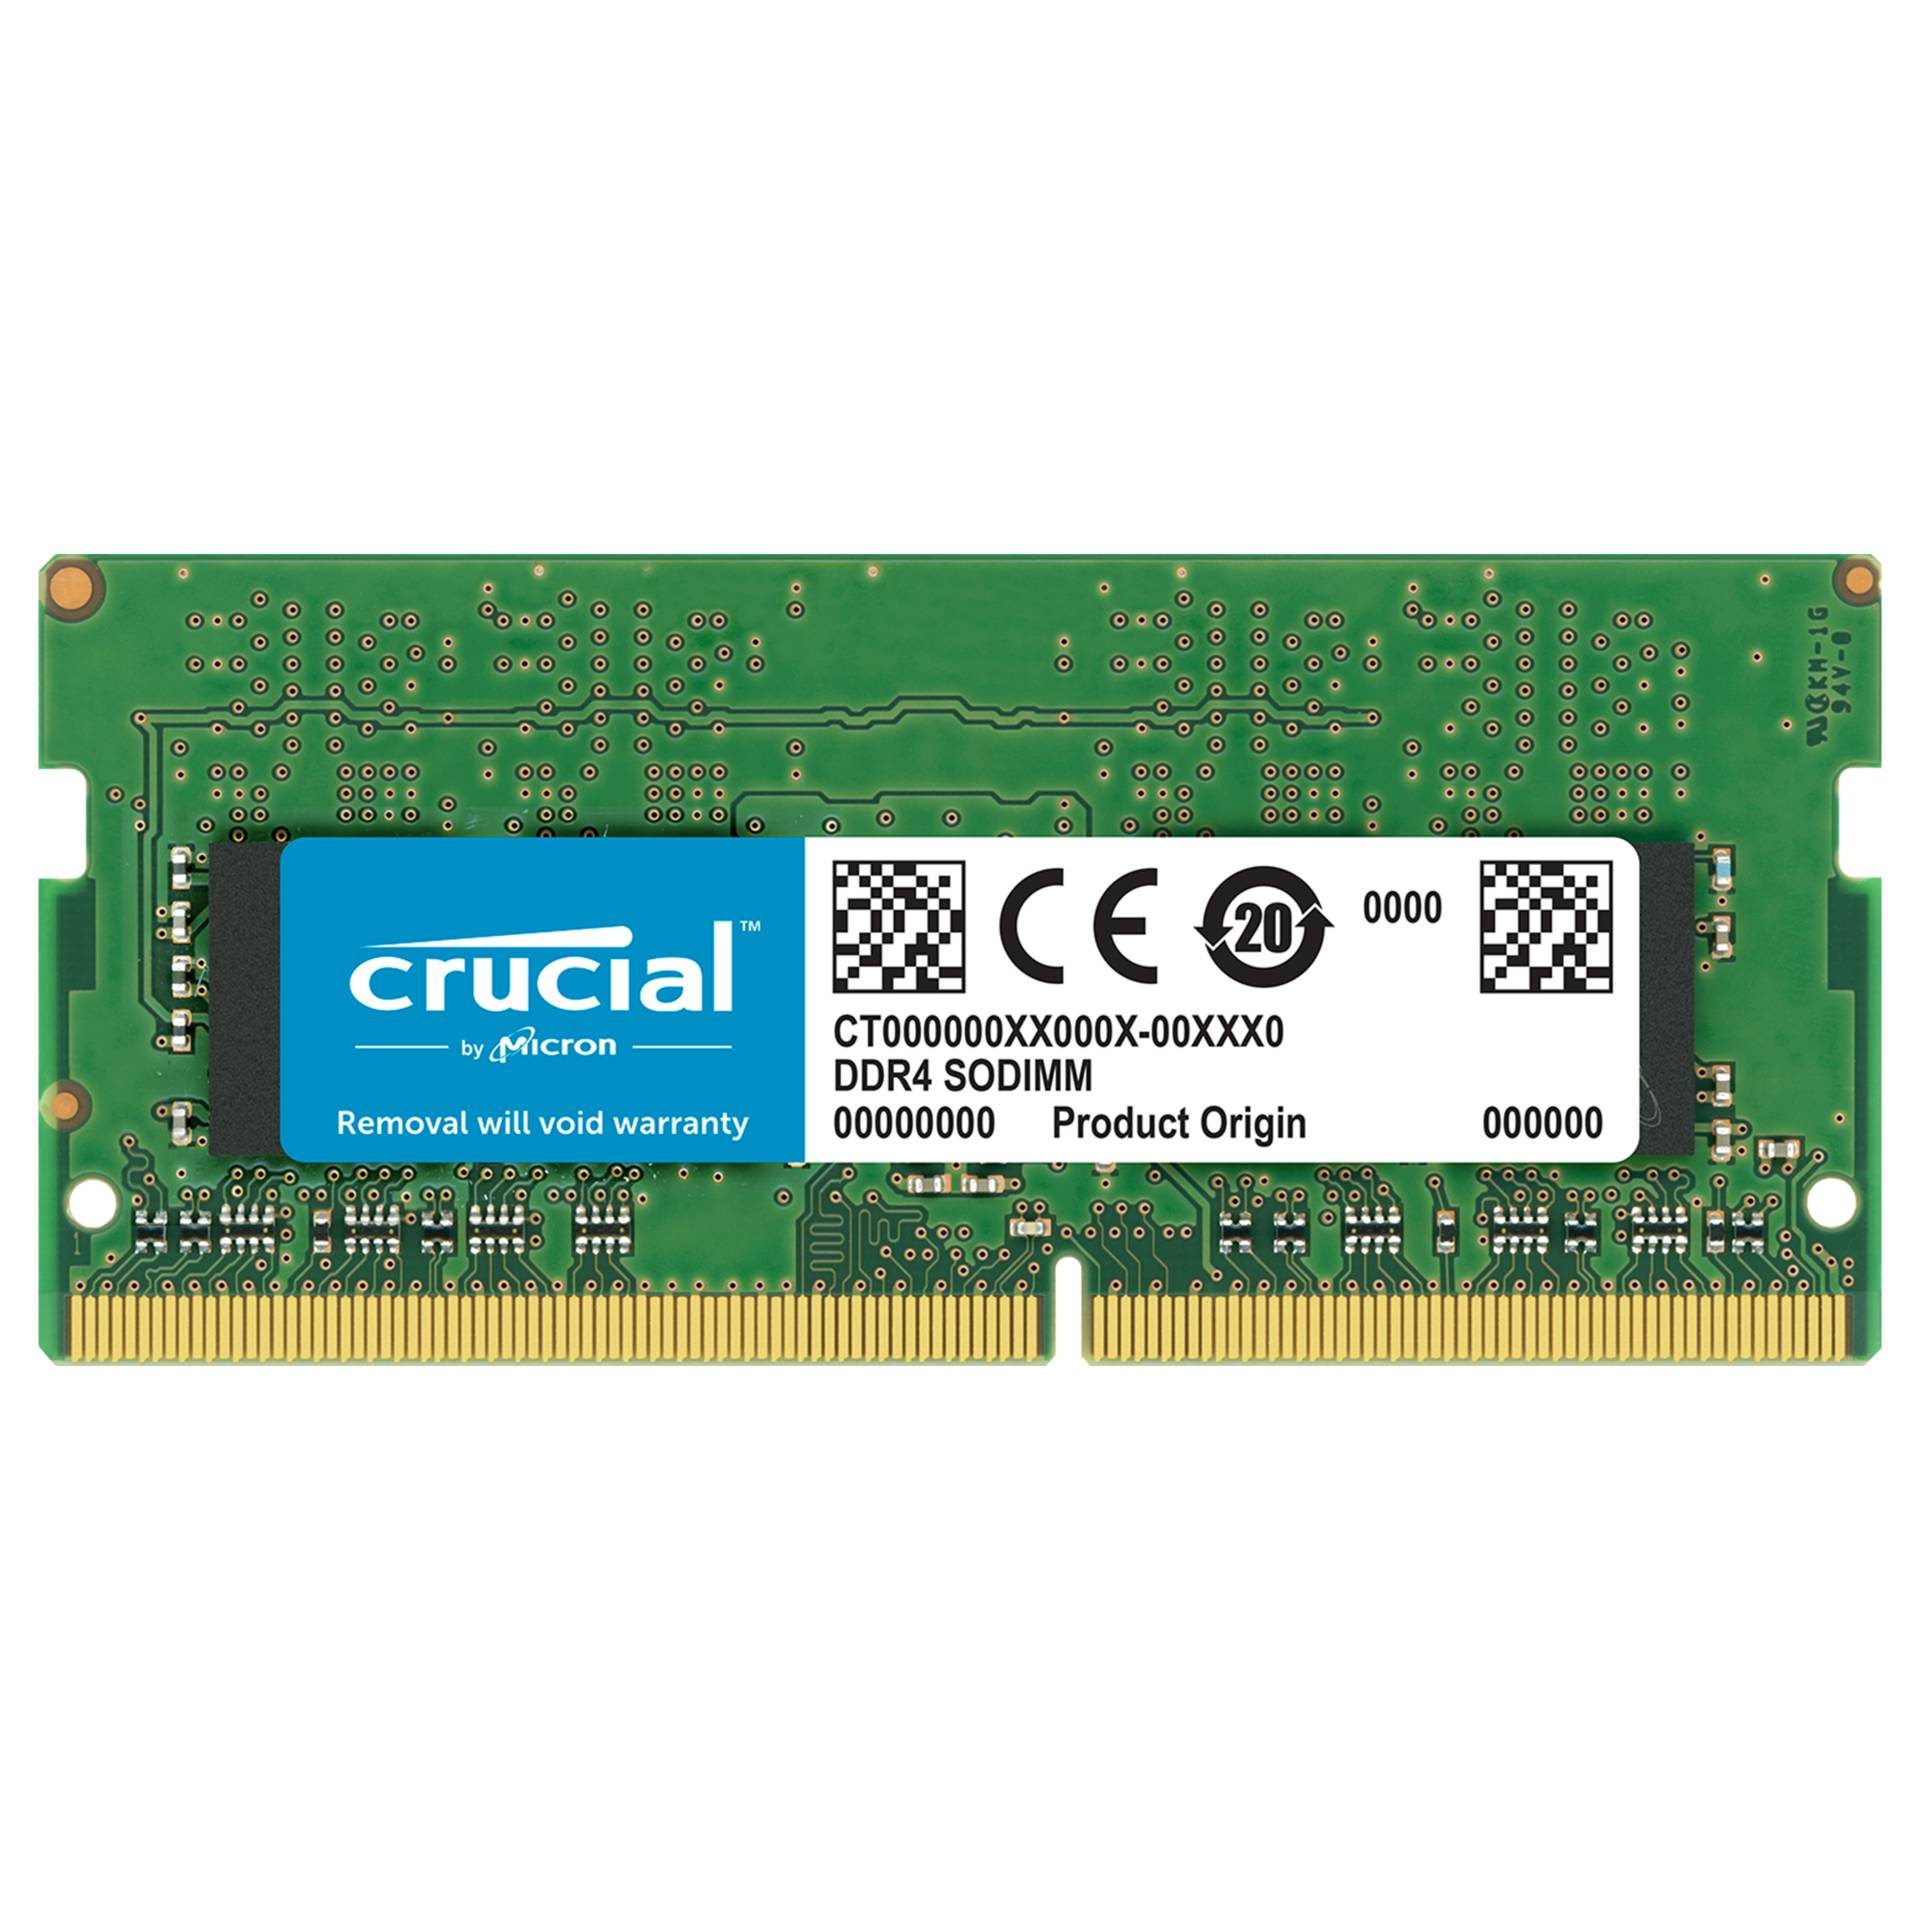 DDR4RAM 16GB DDR4-2666 Crucial Memory for Mac SO-DIMM, CL19 